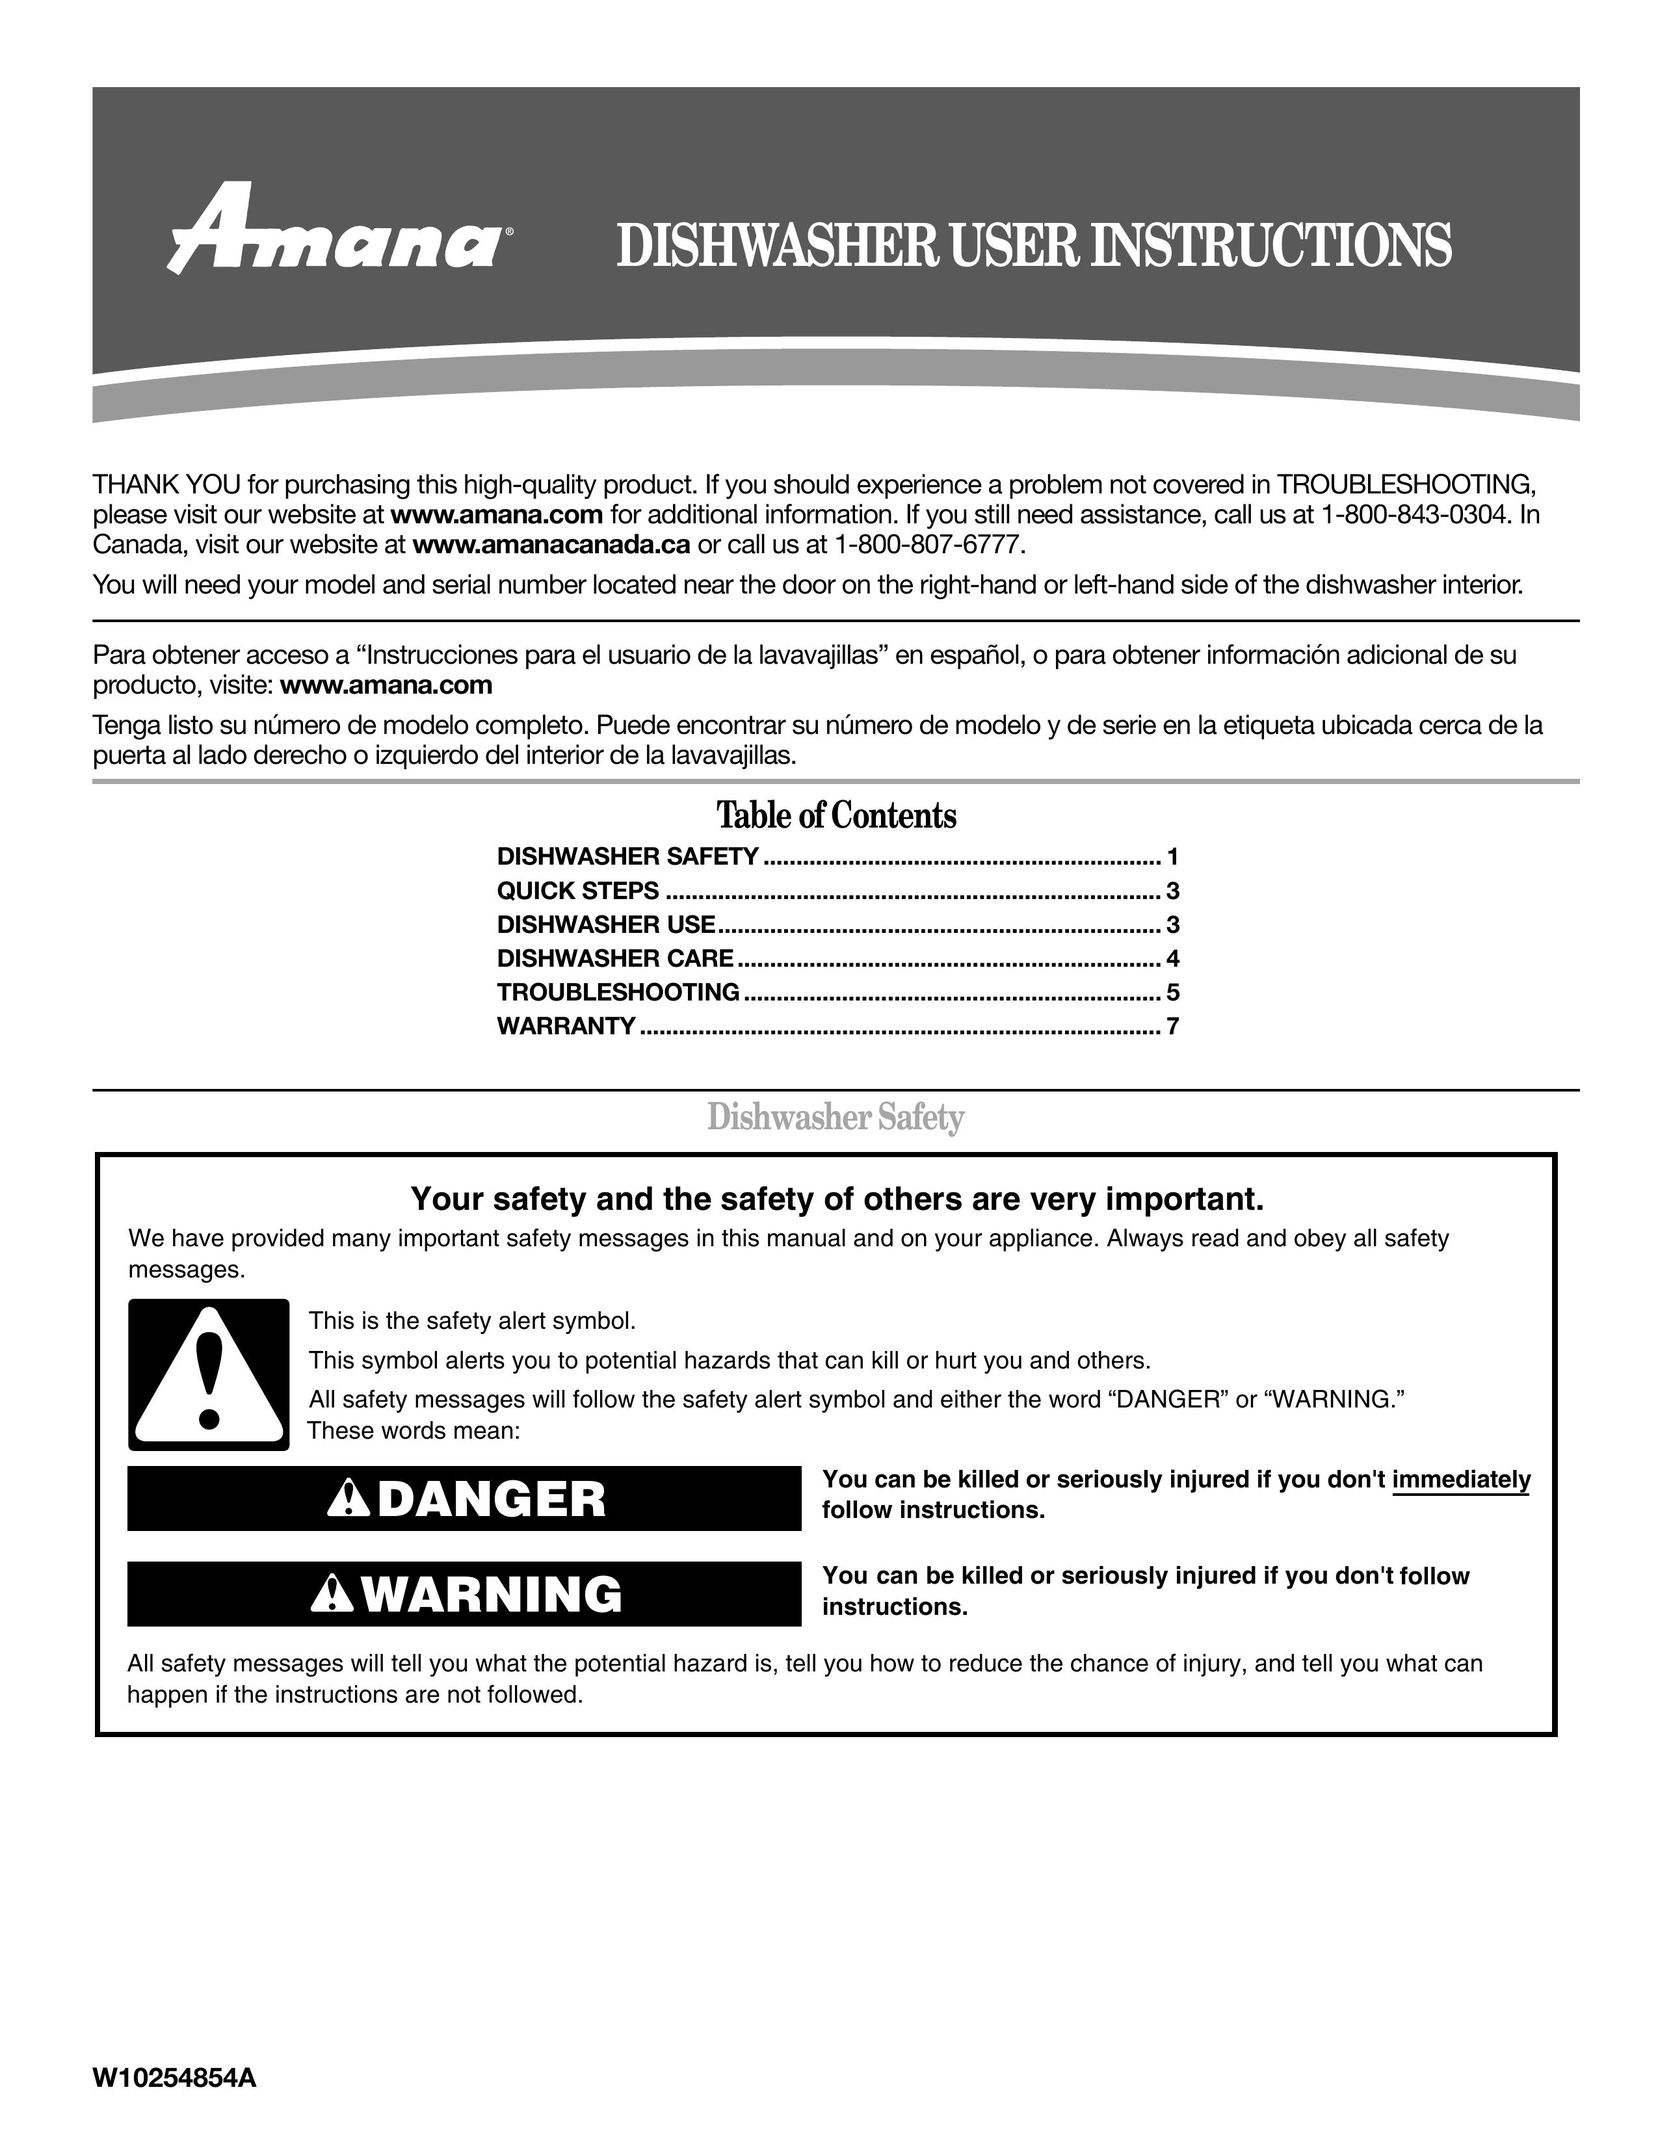 Amana W10254854A Dishwasher User Manual